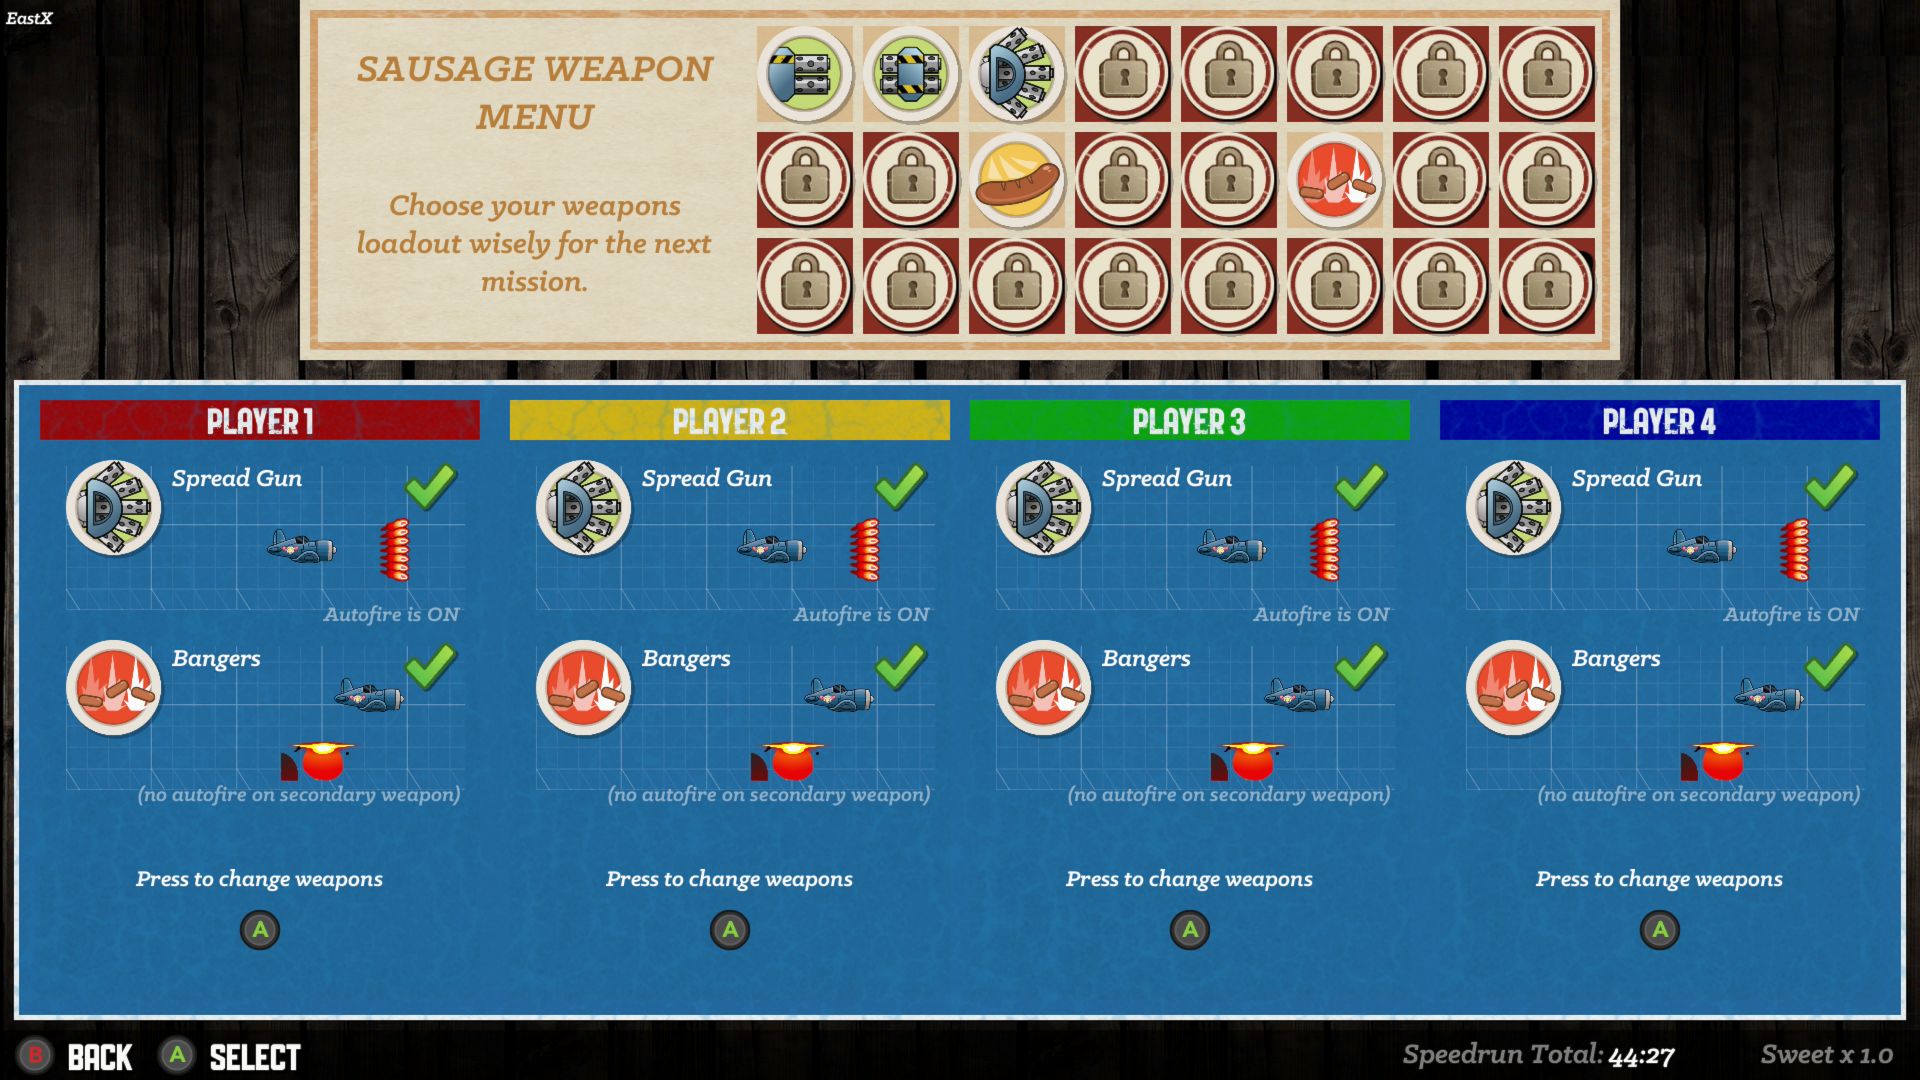 Dogfight A Sausage Bomber Story Xbox Sausage Weapon Menu